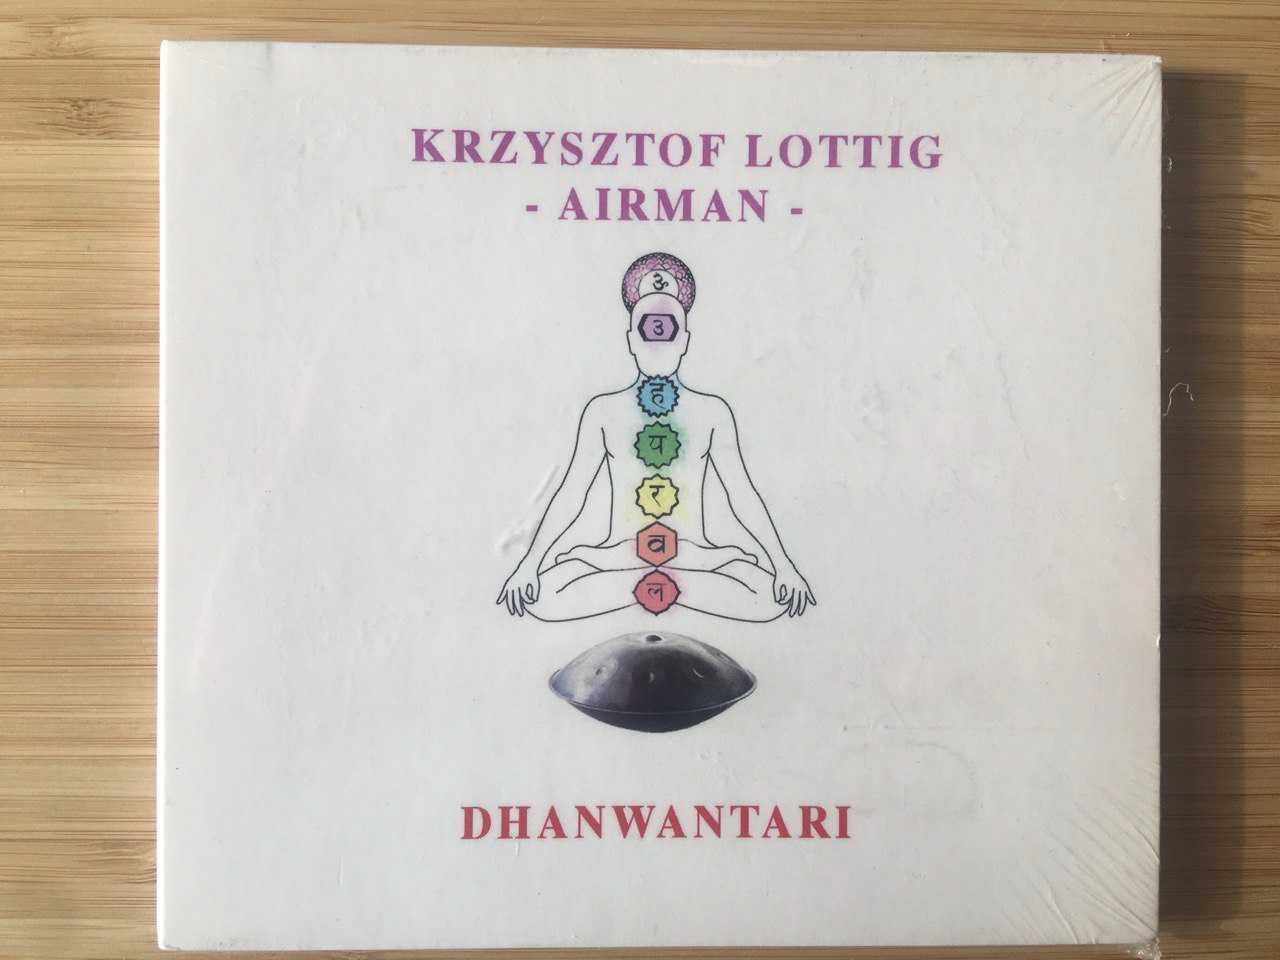 Dhanwantari, Krzysztof Lottig - Airman